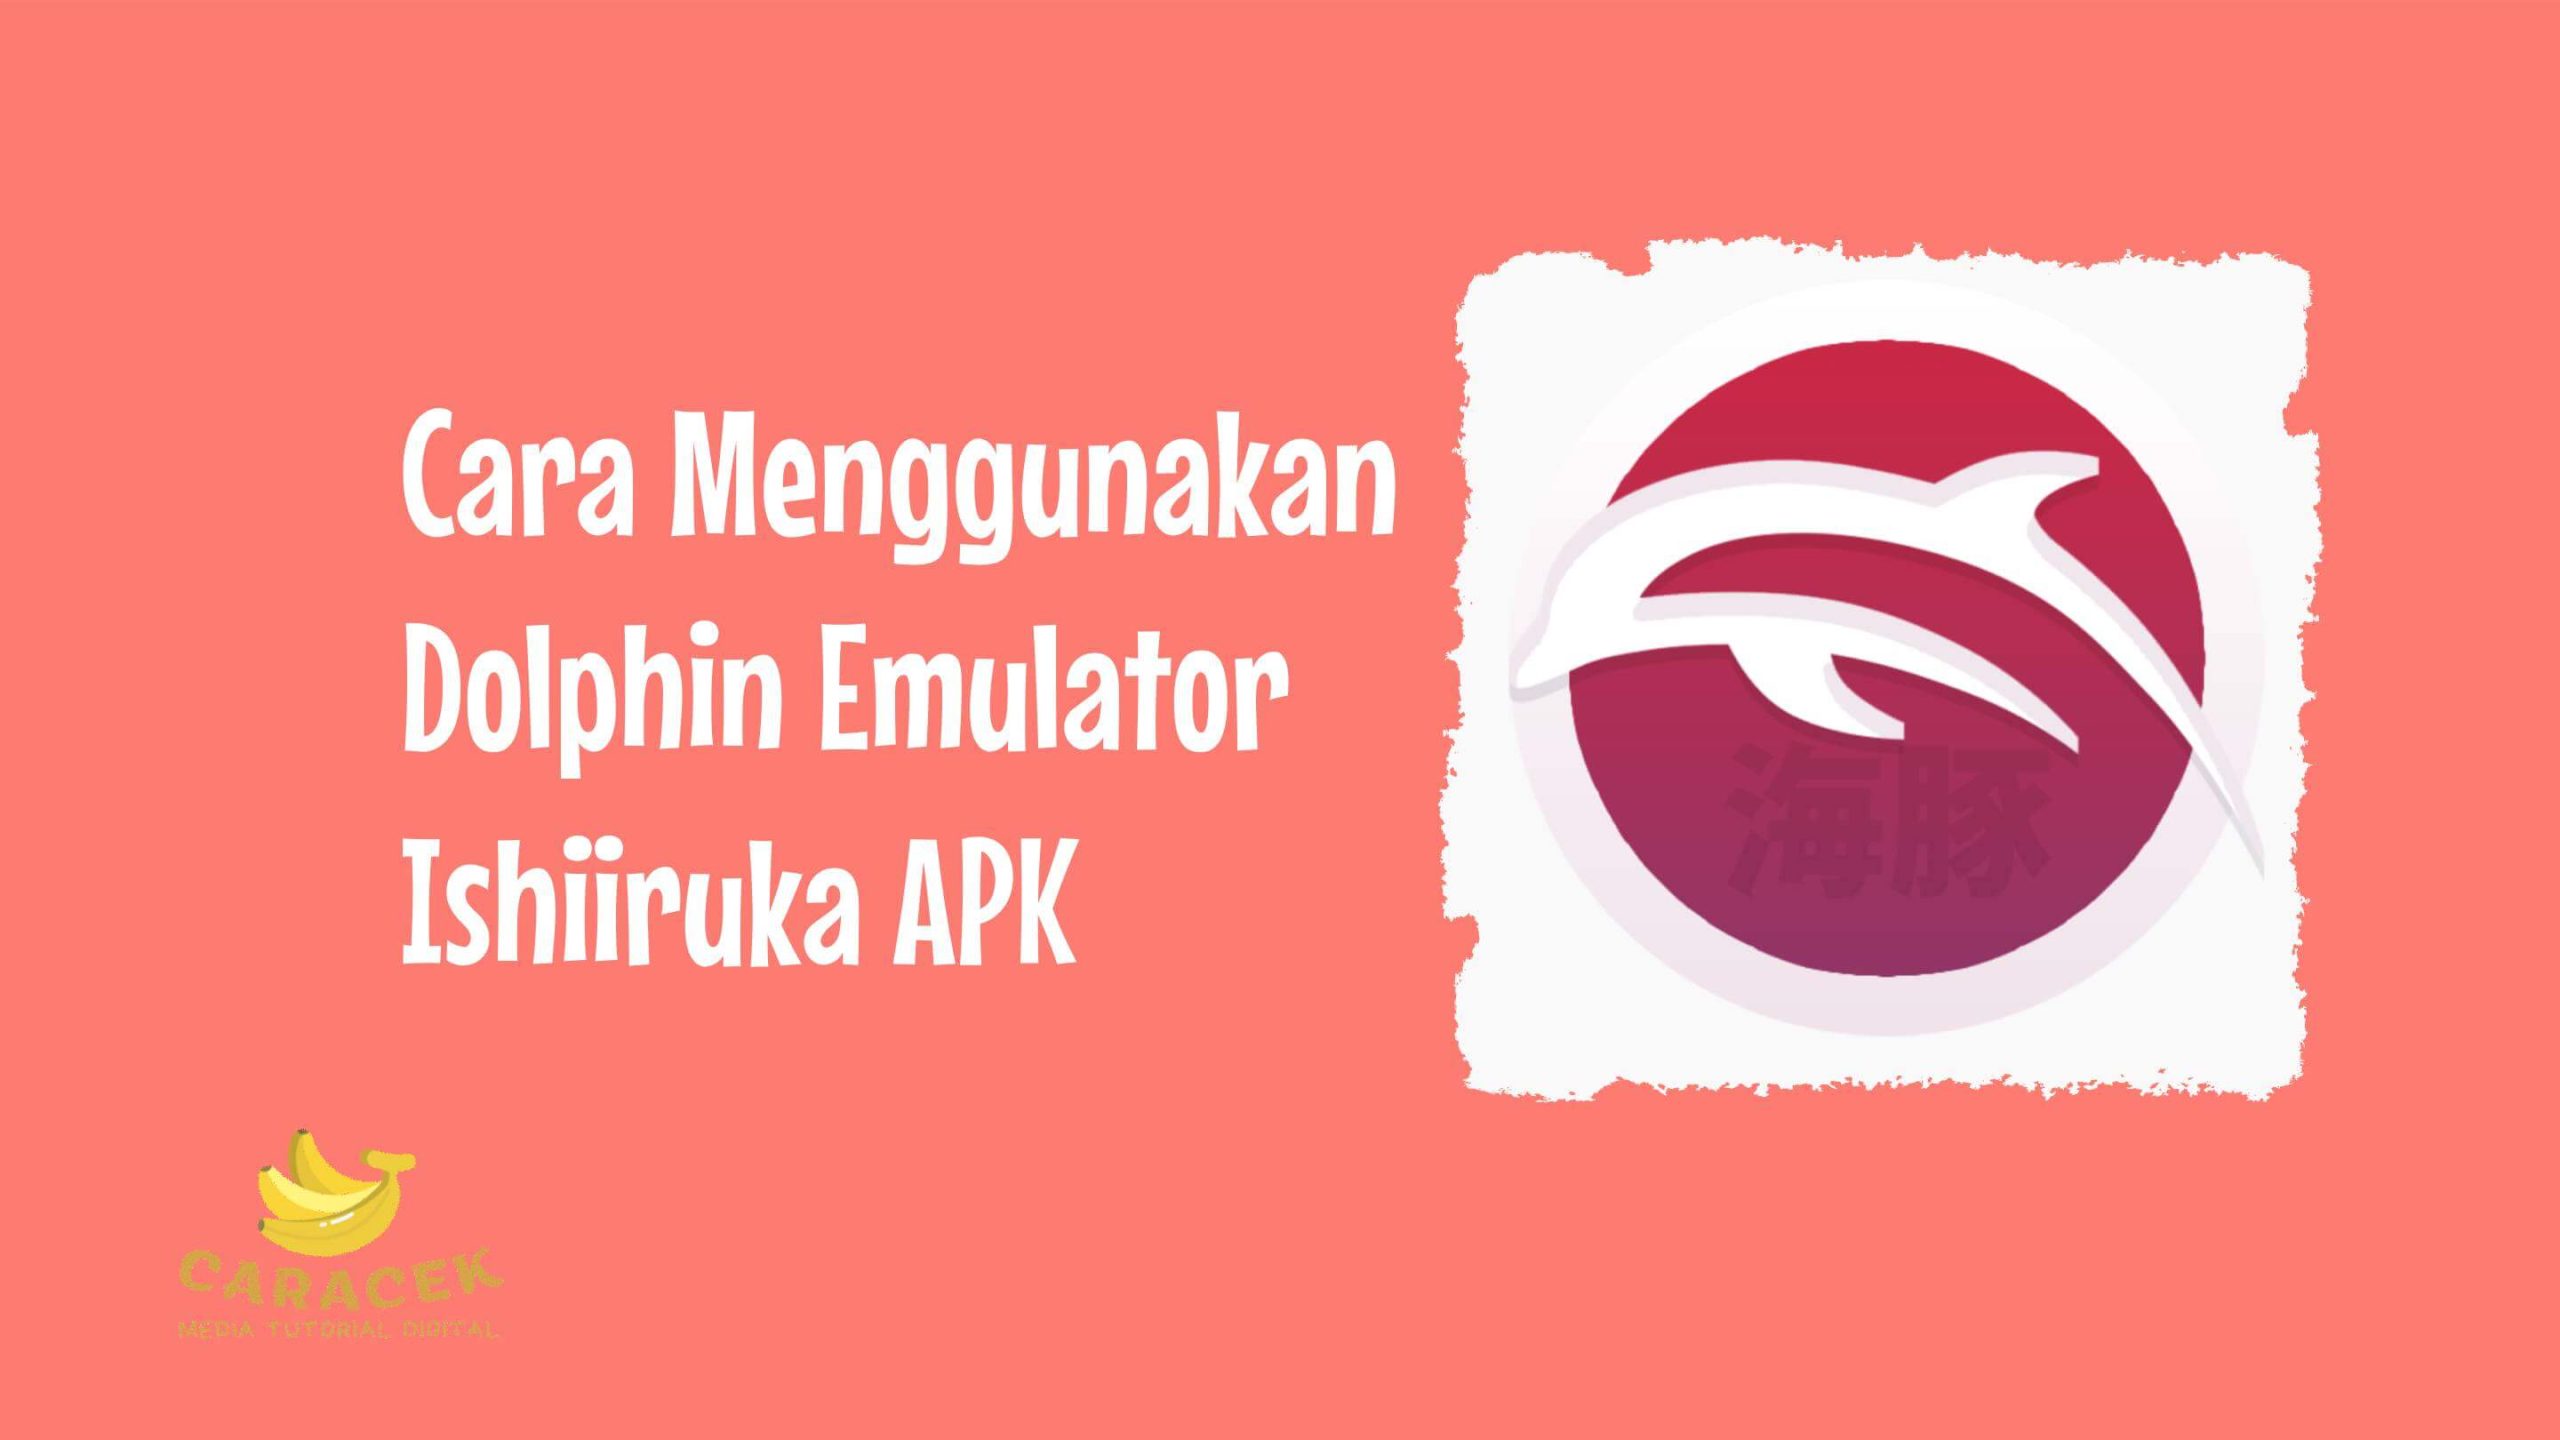 Dolphin Emulator Ishiiruka APK